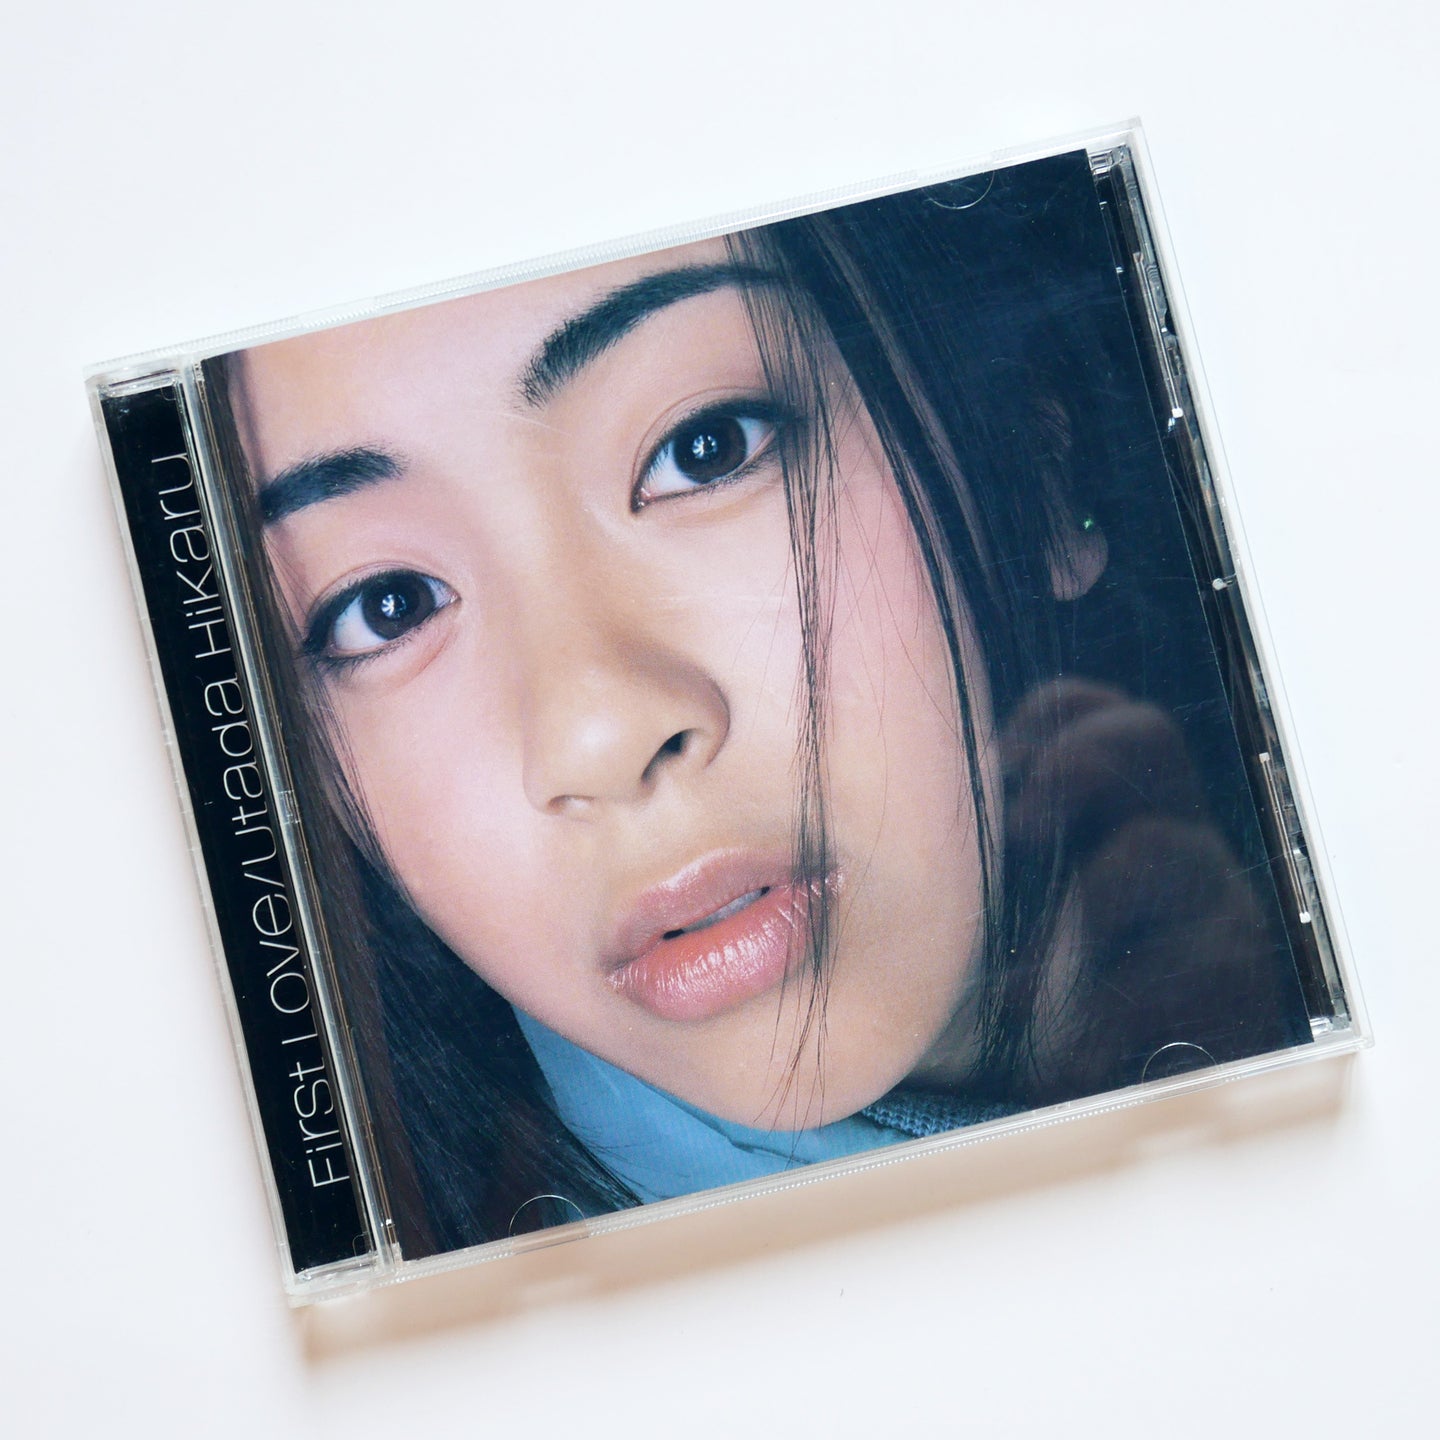 Utada Hikaru - First Love CD